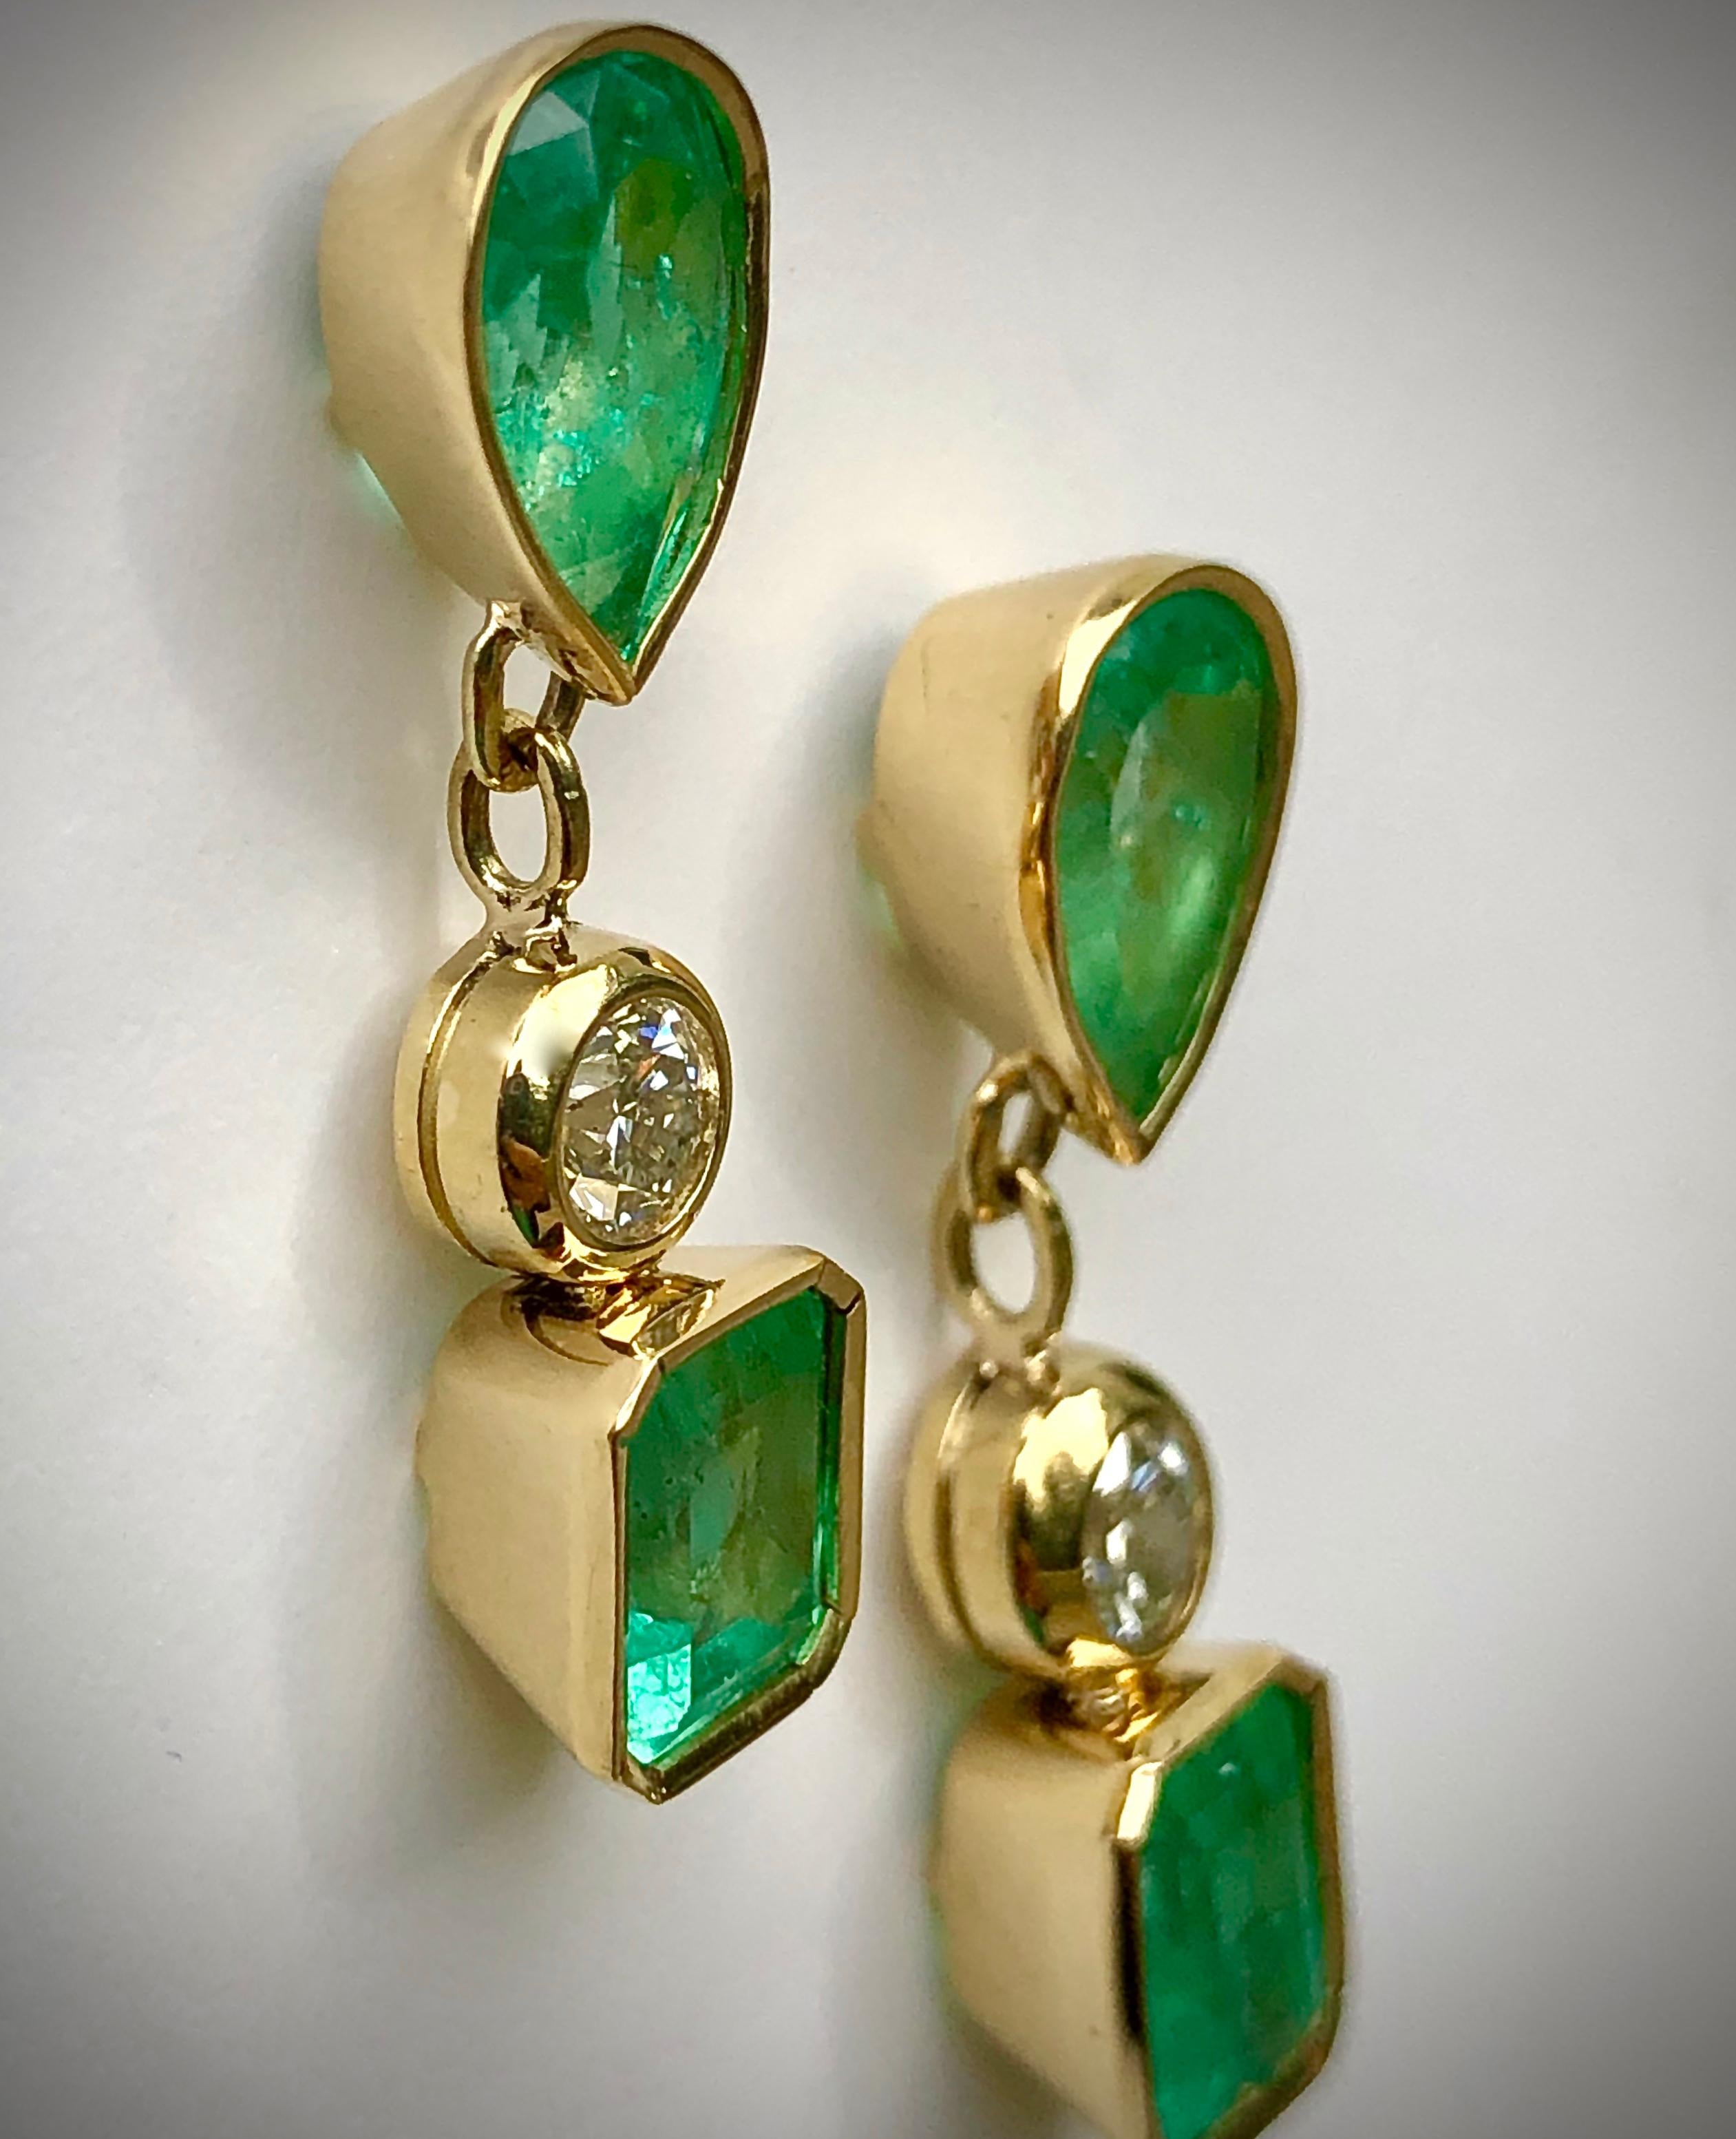 Magnificent 10.12 Carat Natural Colombian Emerald and Diamond Drop Dangle Earrings 18K Yellow Gold
Primary Stones: 100% Natural Colombian emerald
Shape or Cut Emerald : Emerald Cut & Pear Cut 
Color/Clarity : Brilliant Medium 100% NATURAL Green